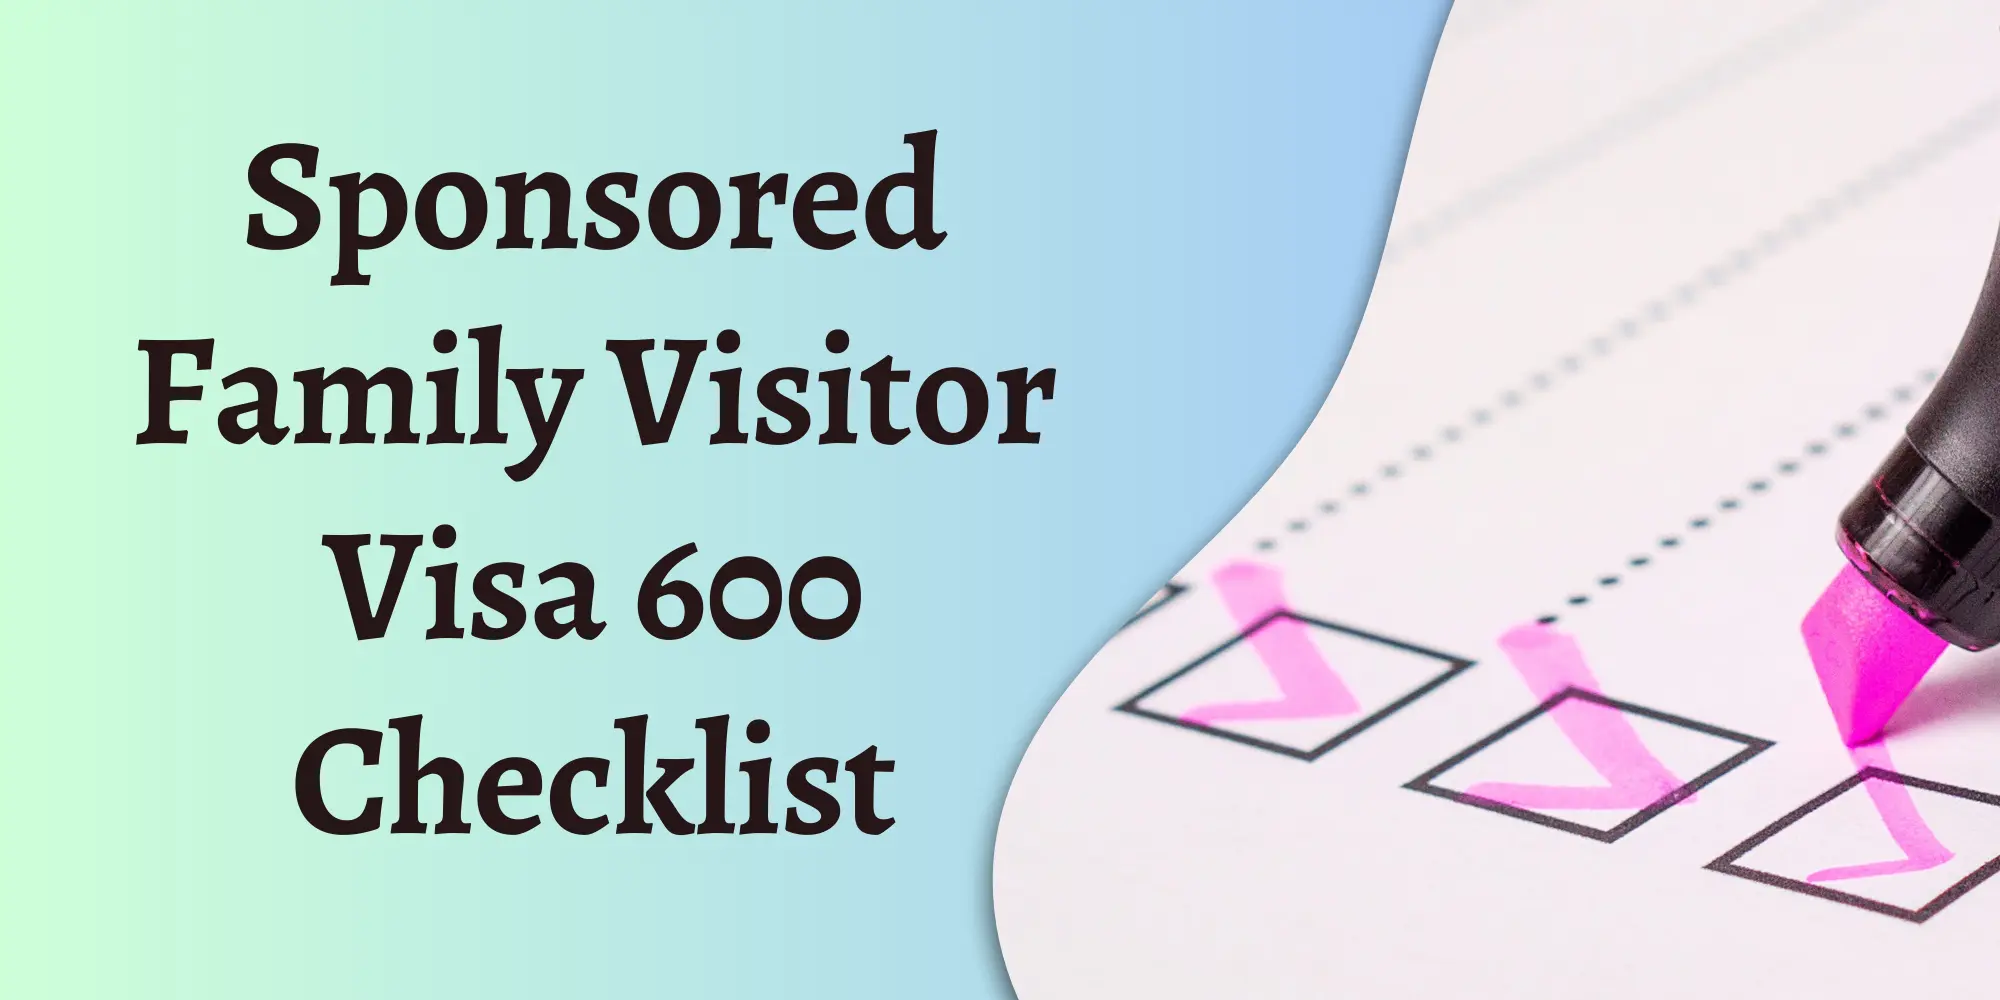 sponsored family visitor visa 600 checklist image thumbnail